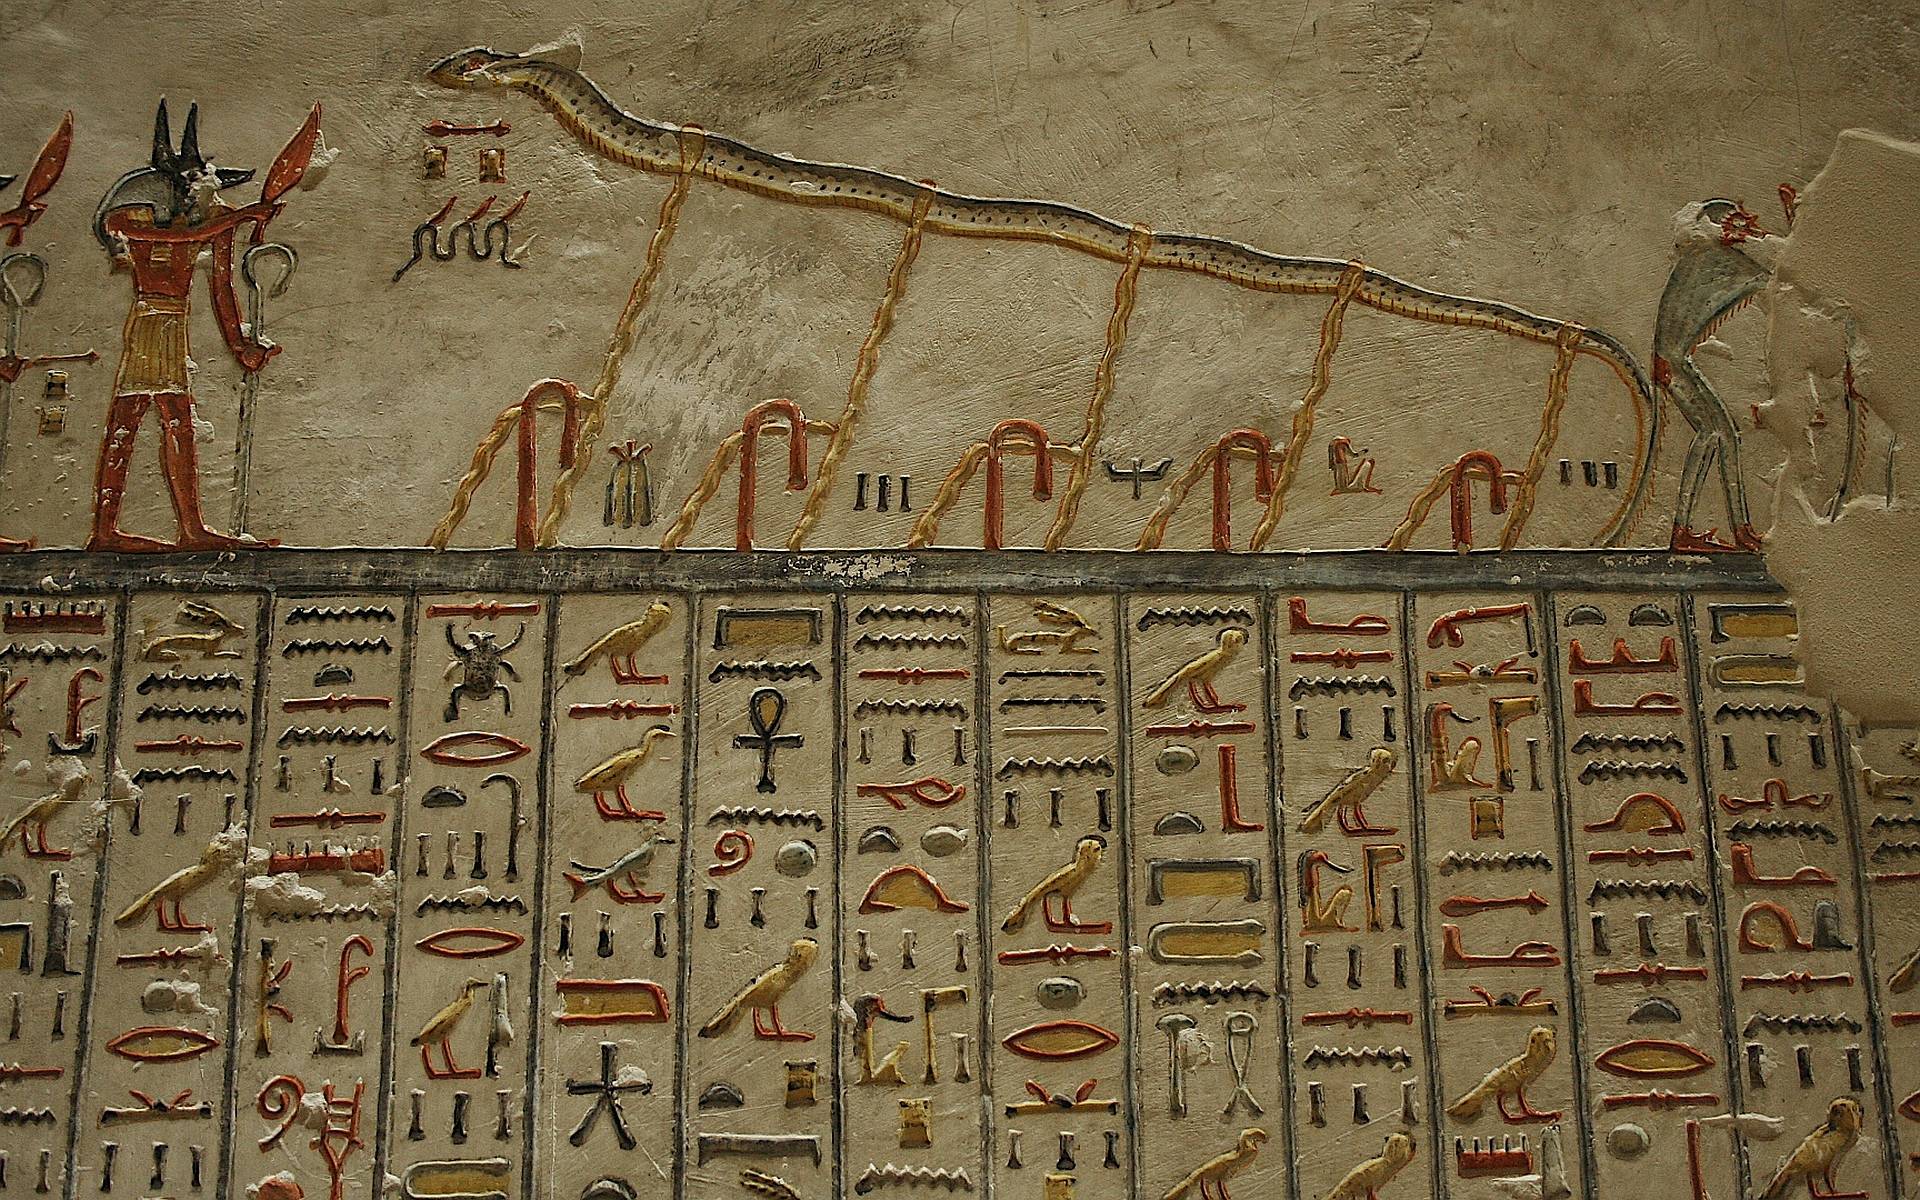 Hieroglyphics Wallpaper Free Hieroglyphics Background